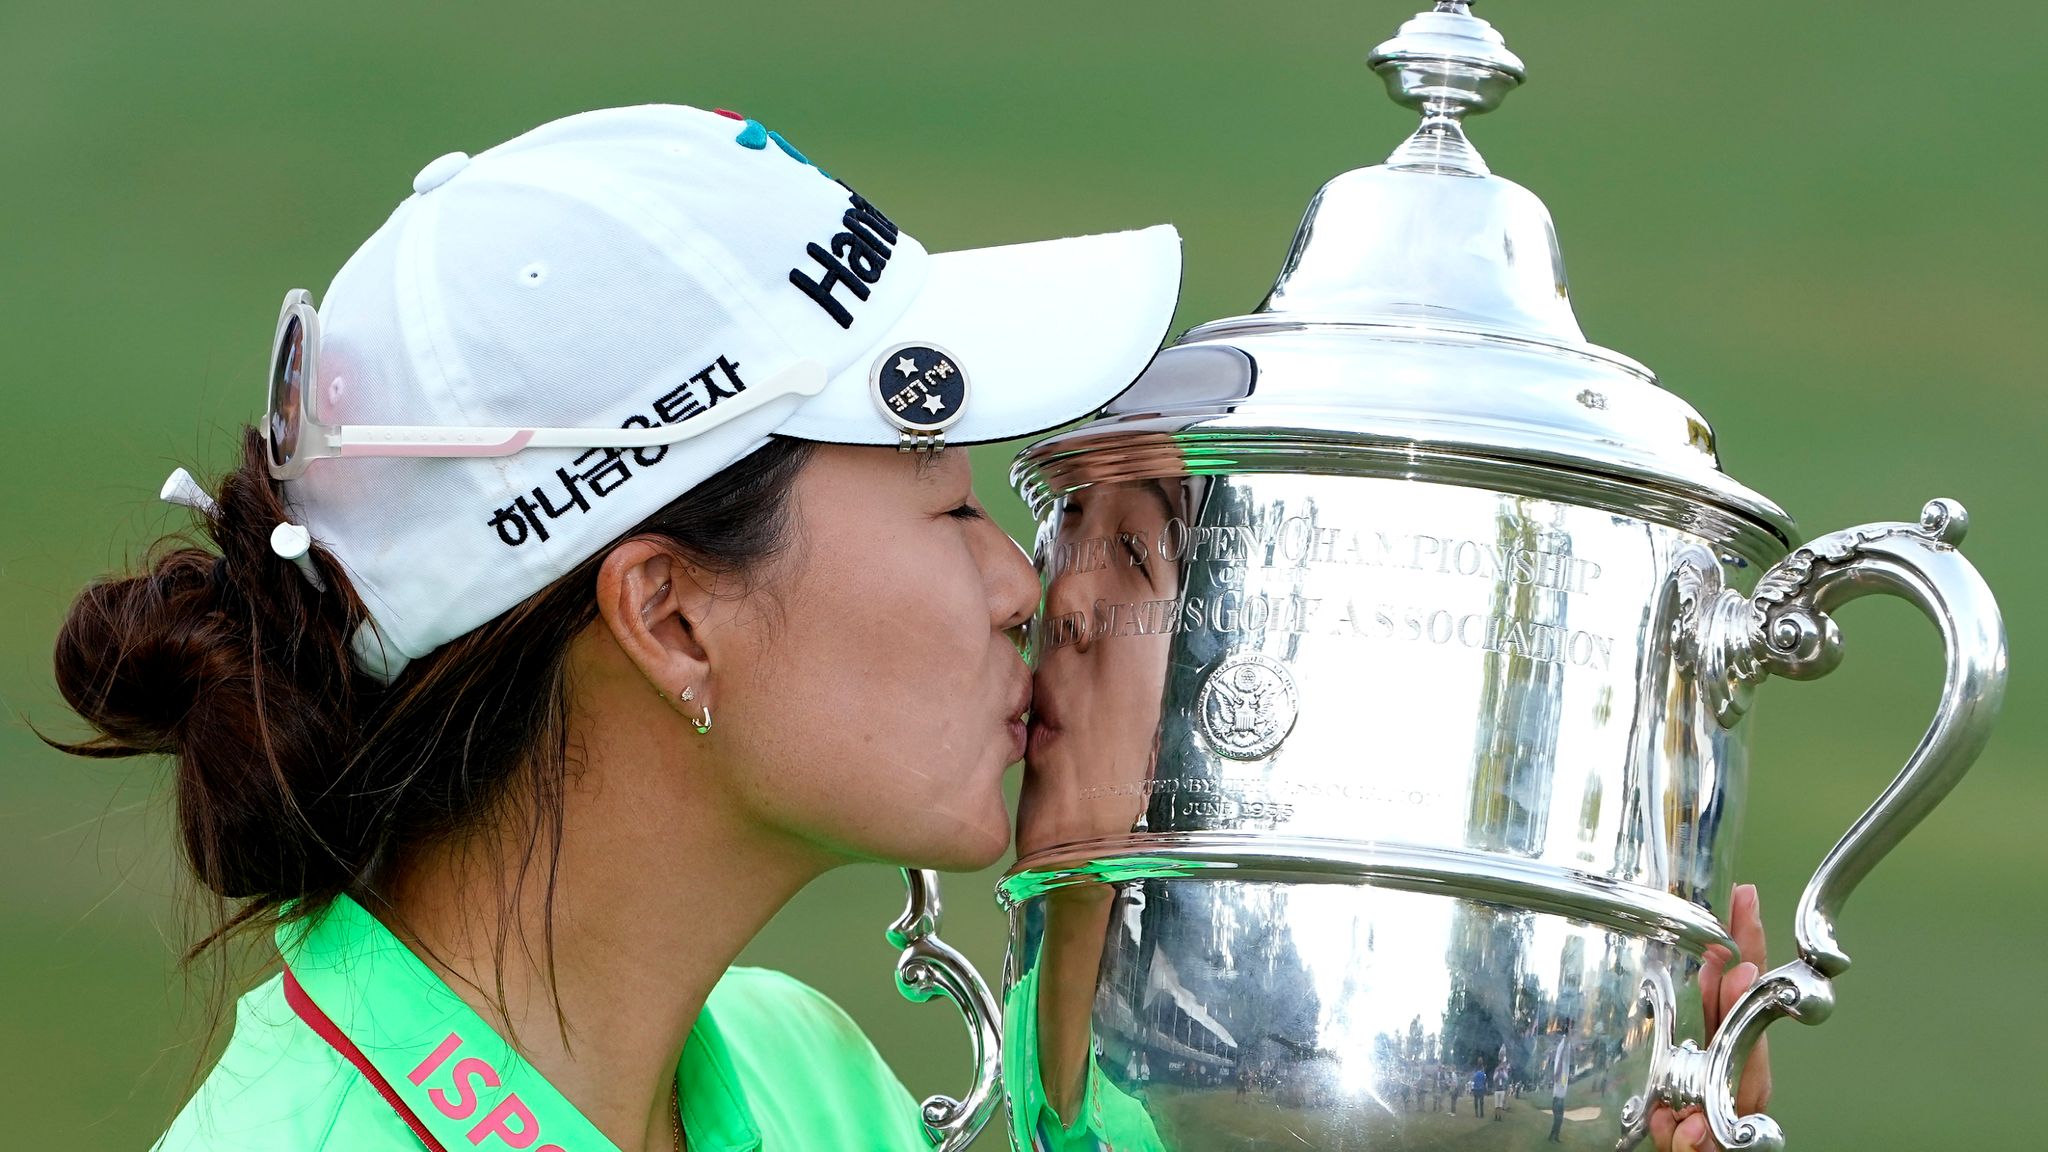 Awesome Aussie: Lee wins U.S. Women's Open, record $1.8M, LPGA